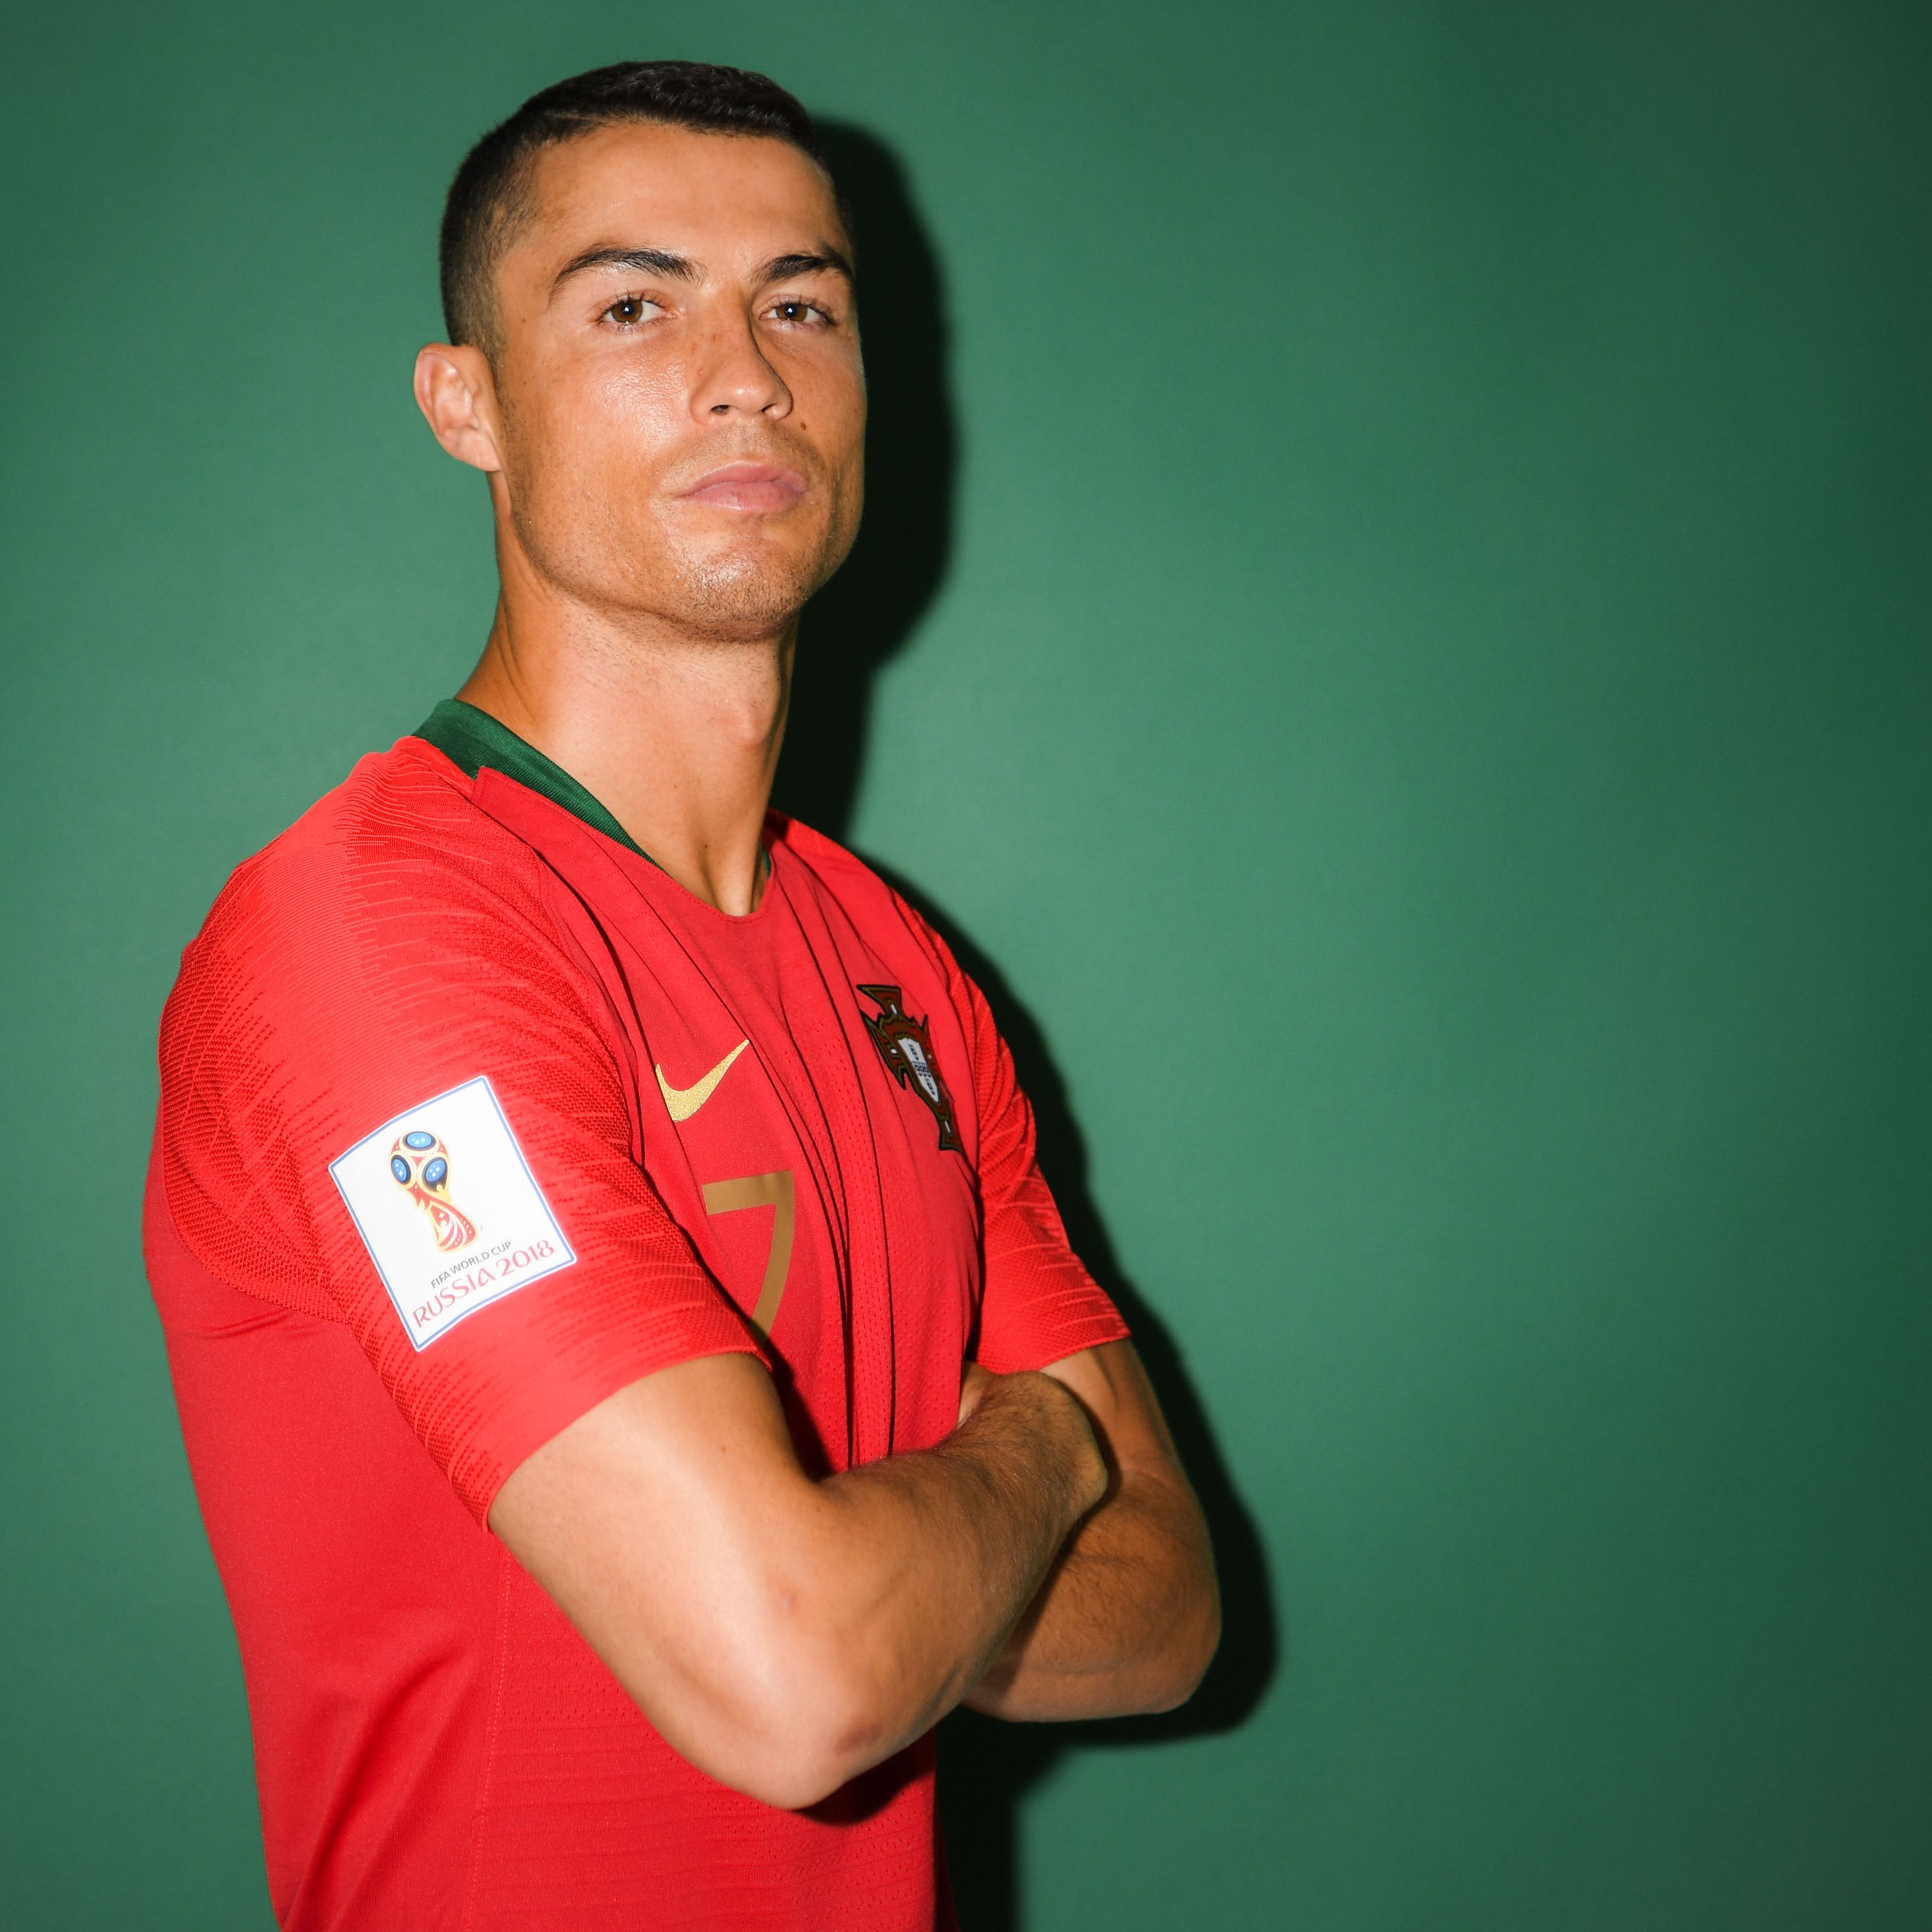 Cristiano Ronaldo Portugal Portrait iPad Pro Retina Display HD 4k Wallpaper, Image, Background, Photo and Picture